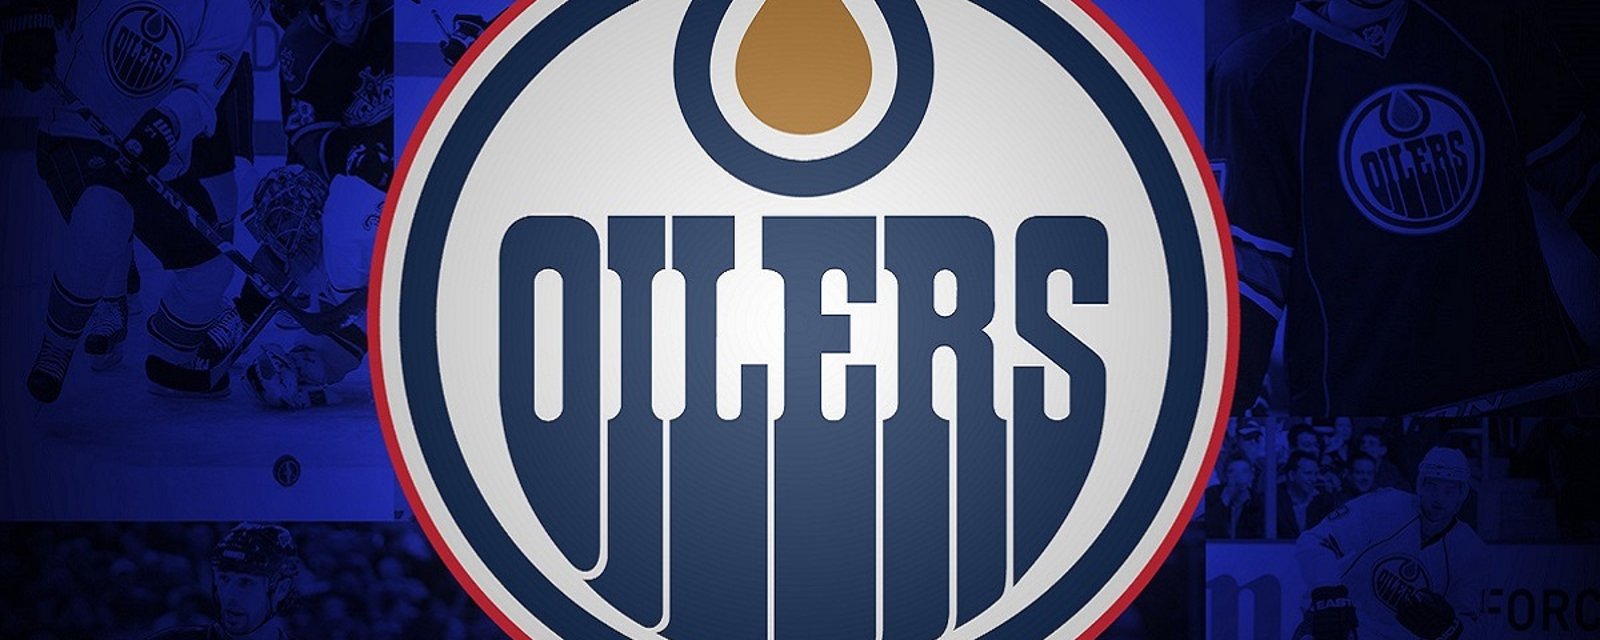 Edmonton Oilers rookie set to make NHL debut on Saturday.